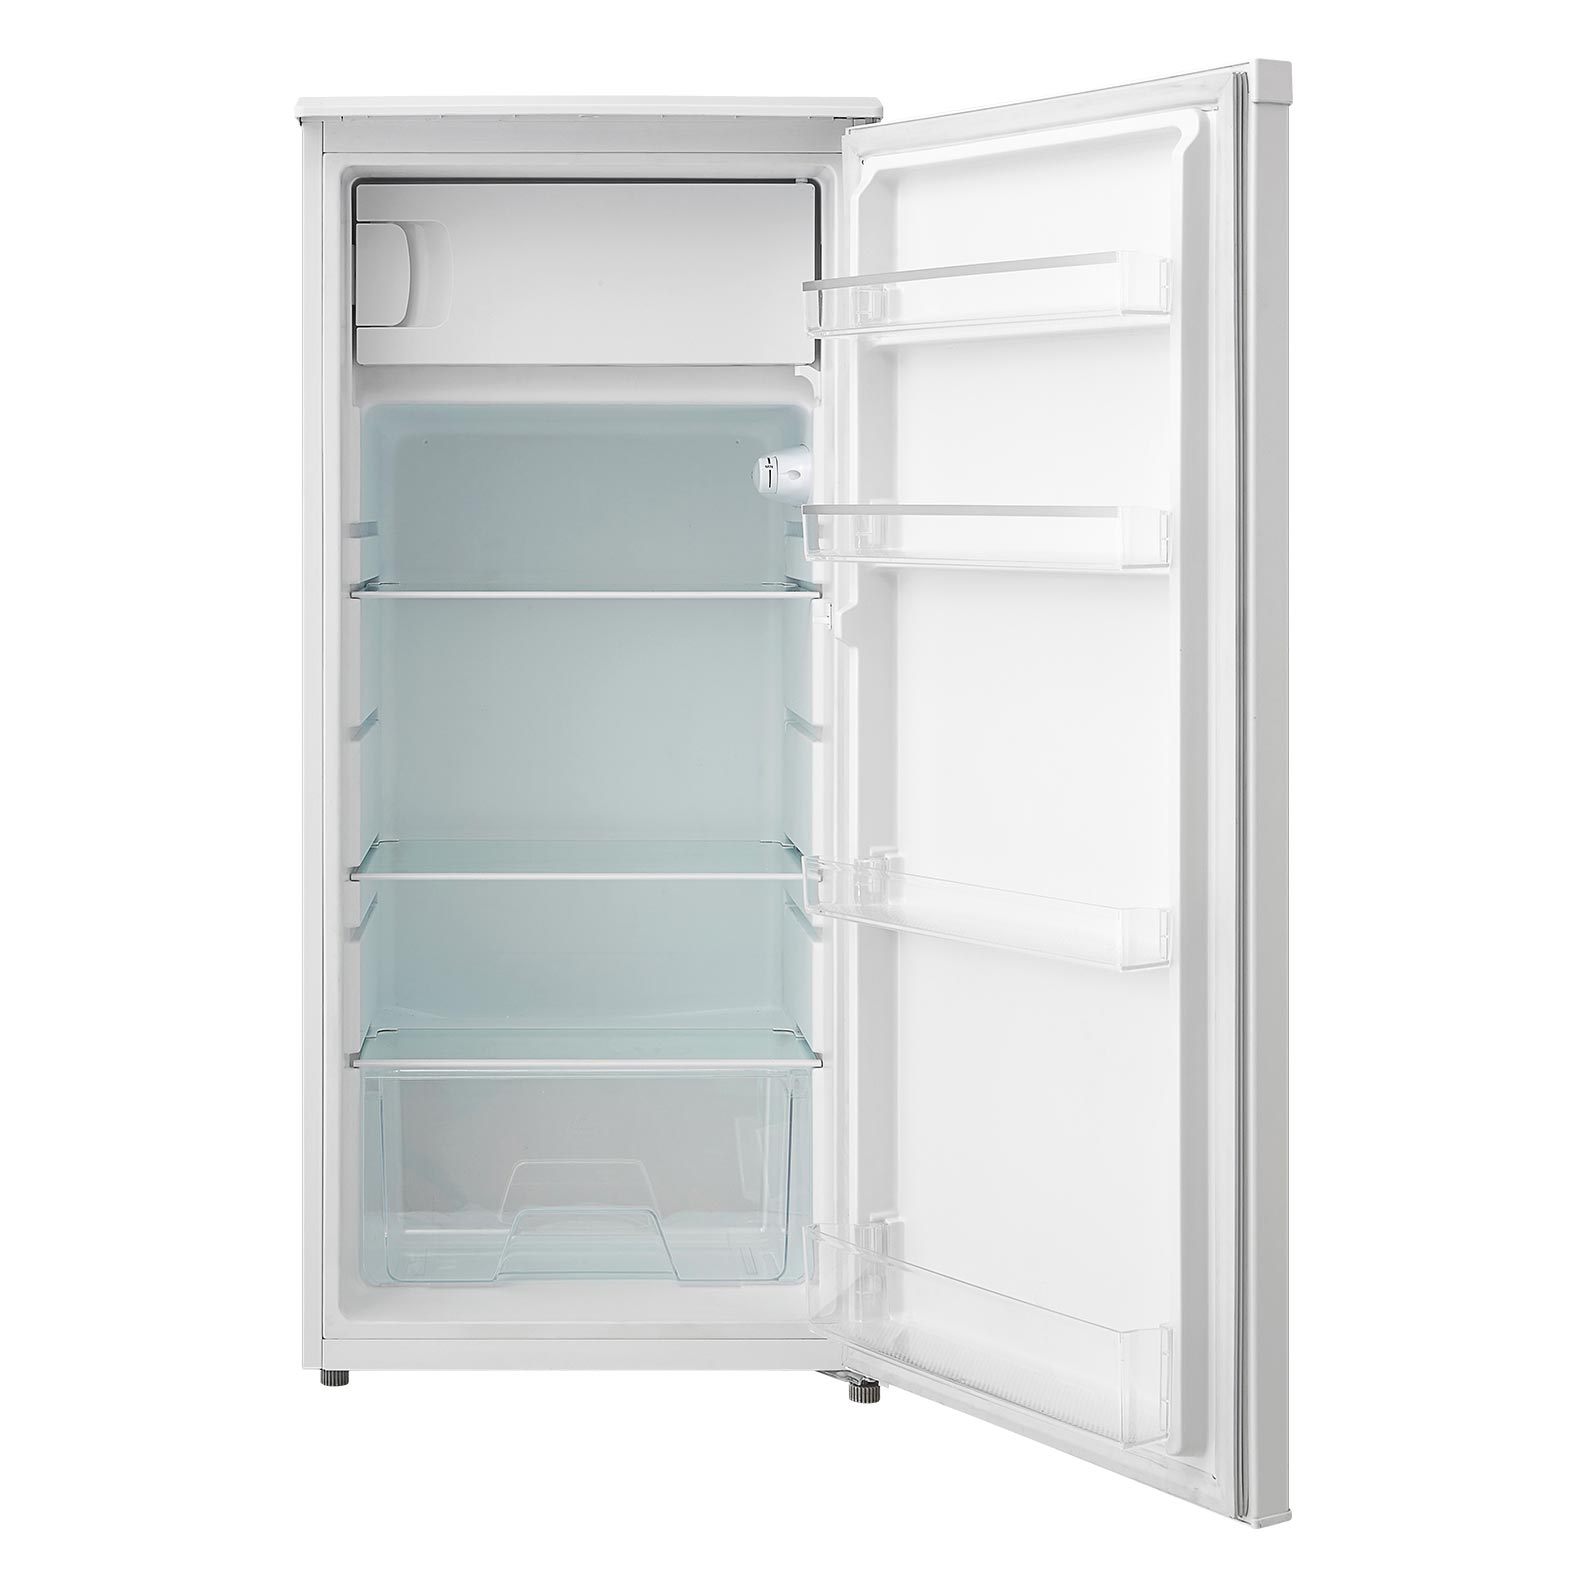 Single door refrigerators - RS2000M1 - Tesla Innovations